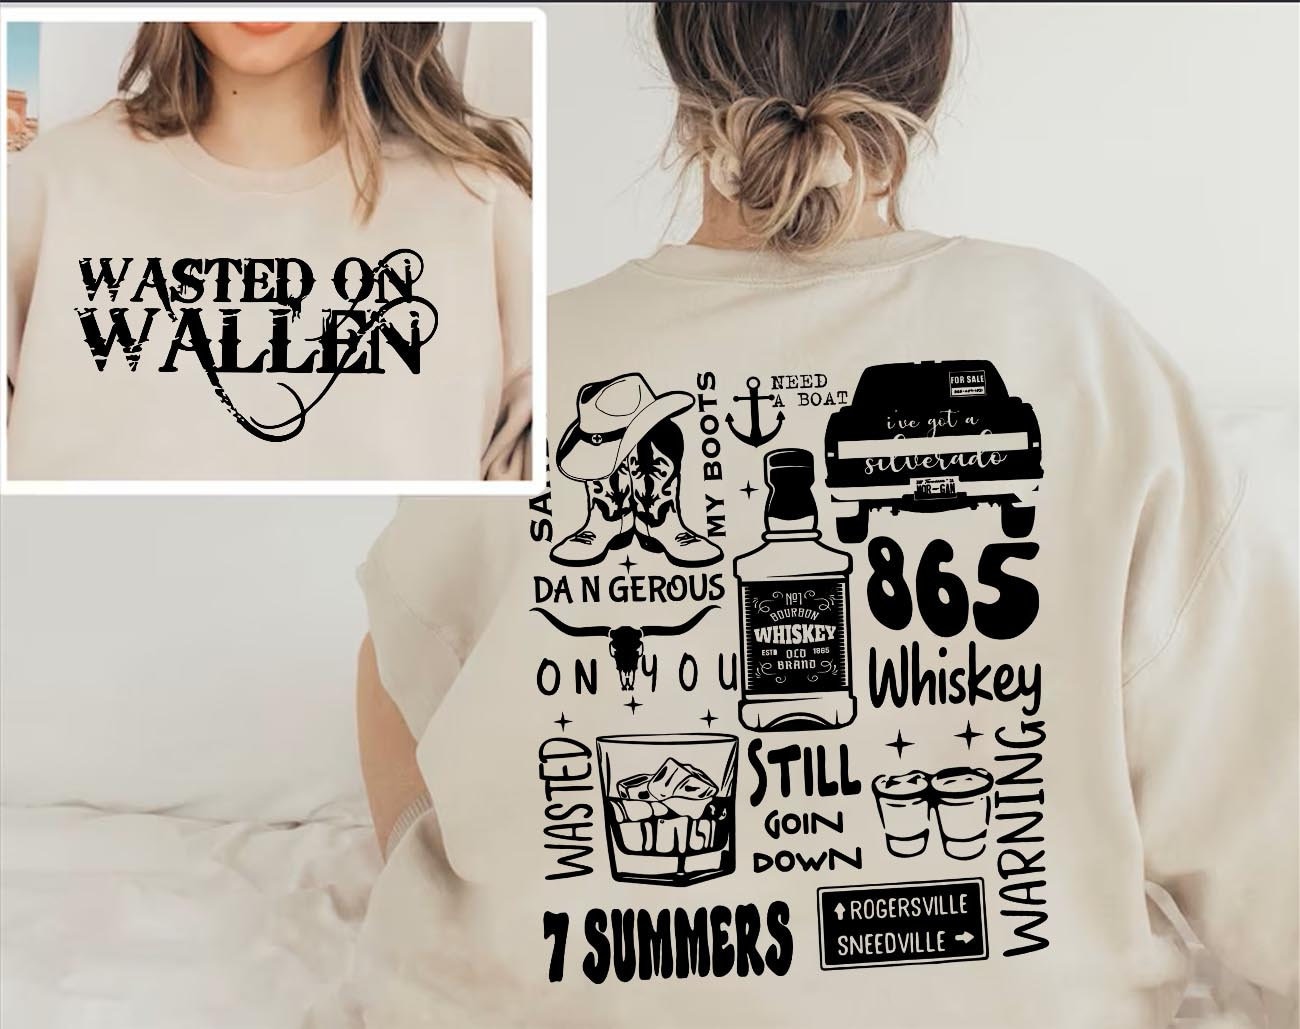 Wallen Wasted Album Dangerous Shirt Sweatshirt, Wallen Bullhead Shirt